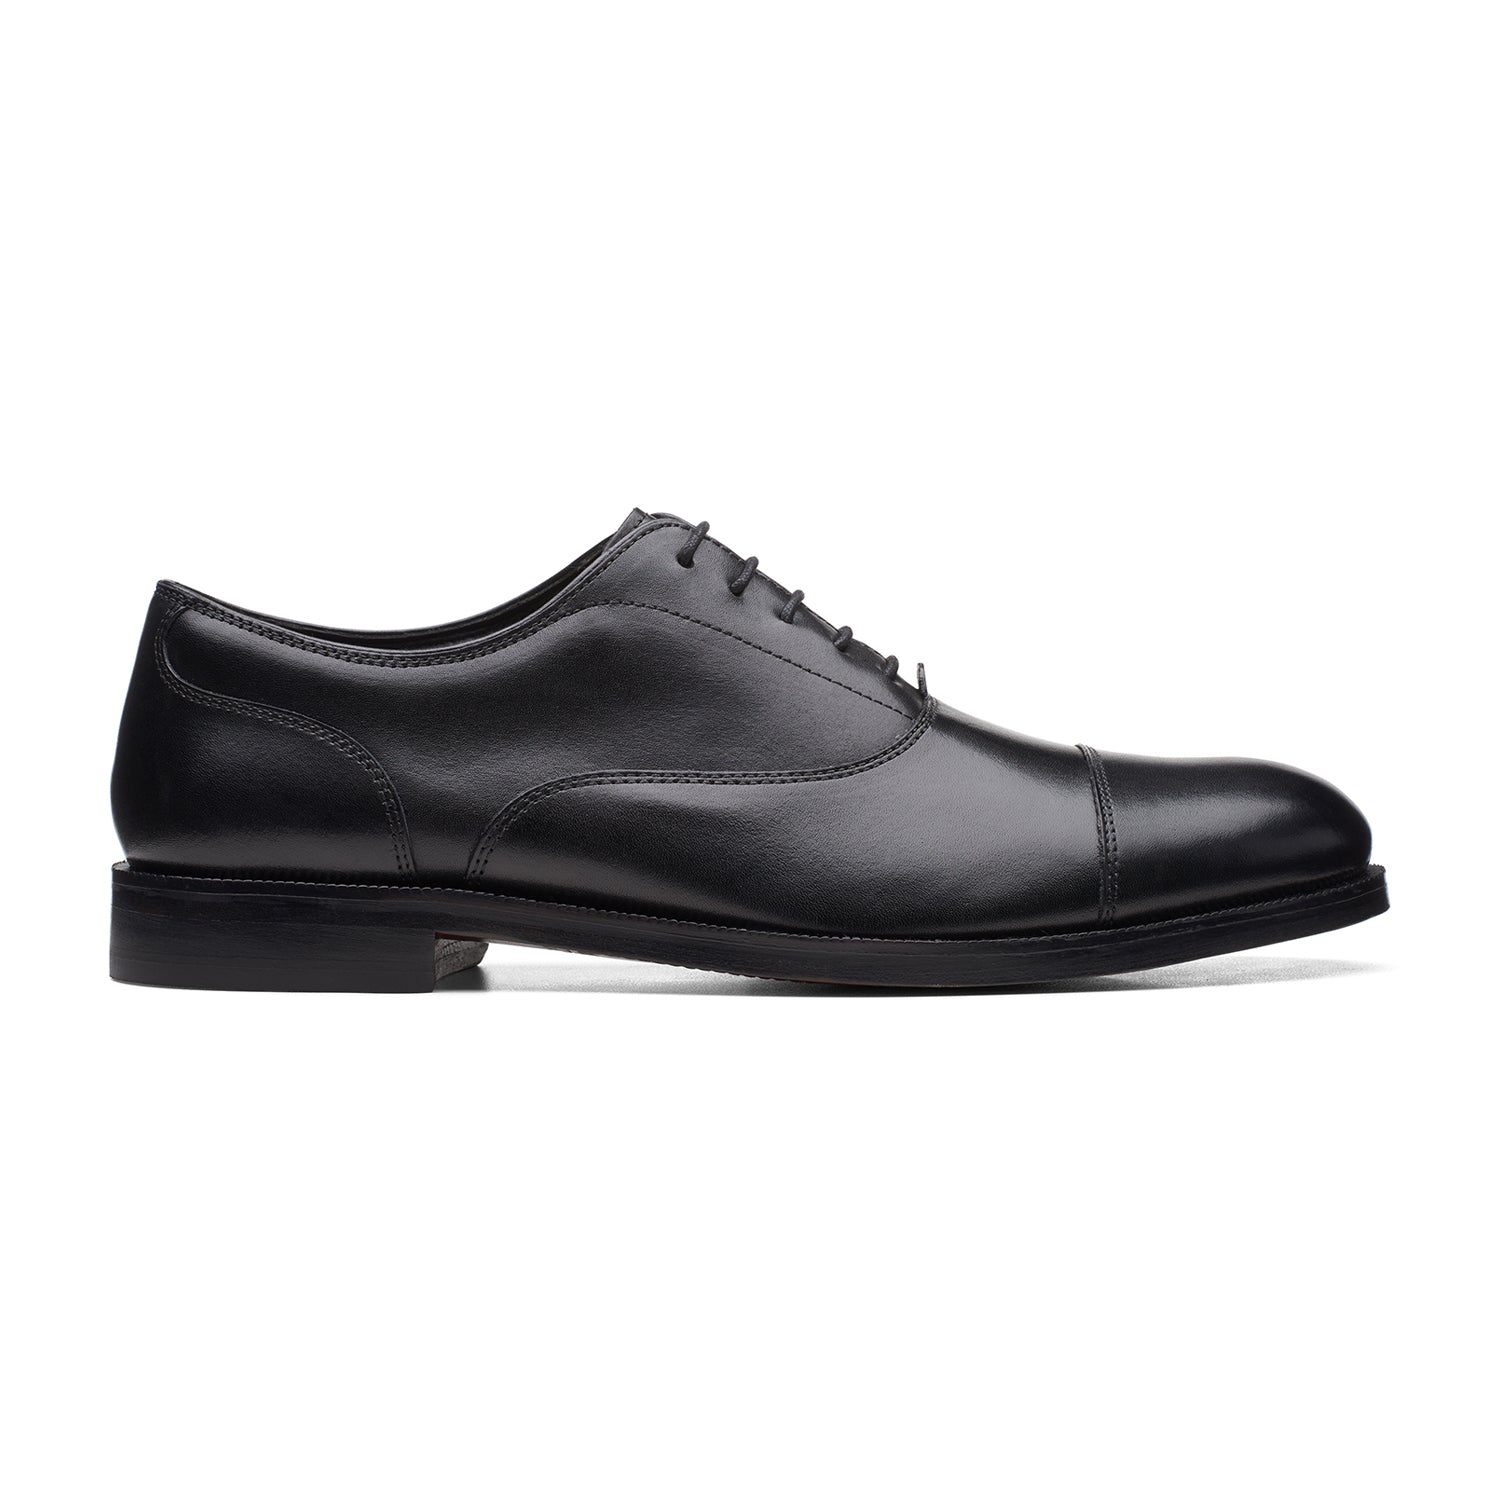 Shop Craftdean Cap - Men's Black Shoes | Clarks